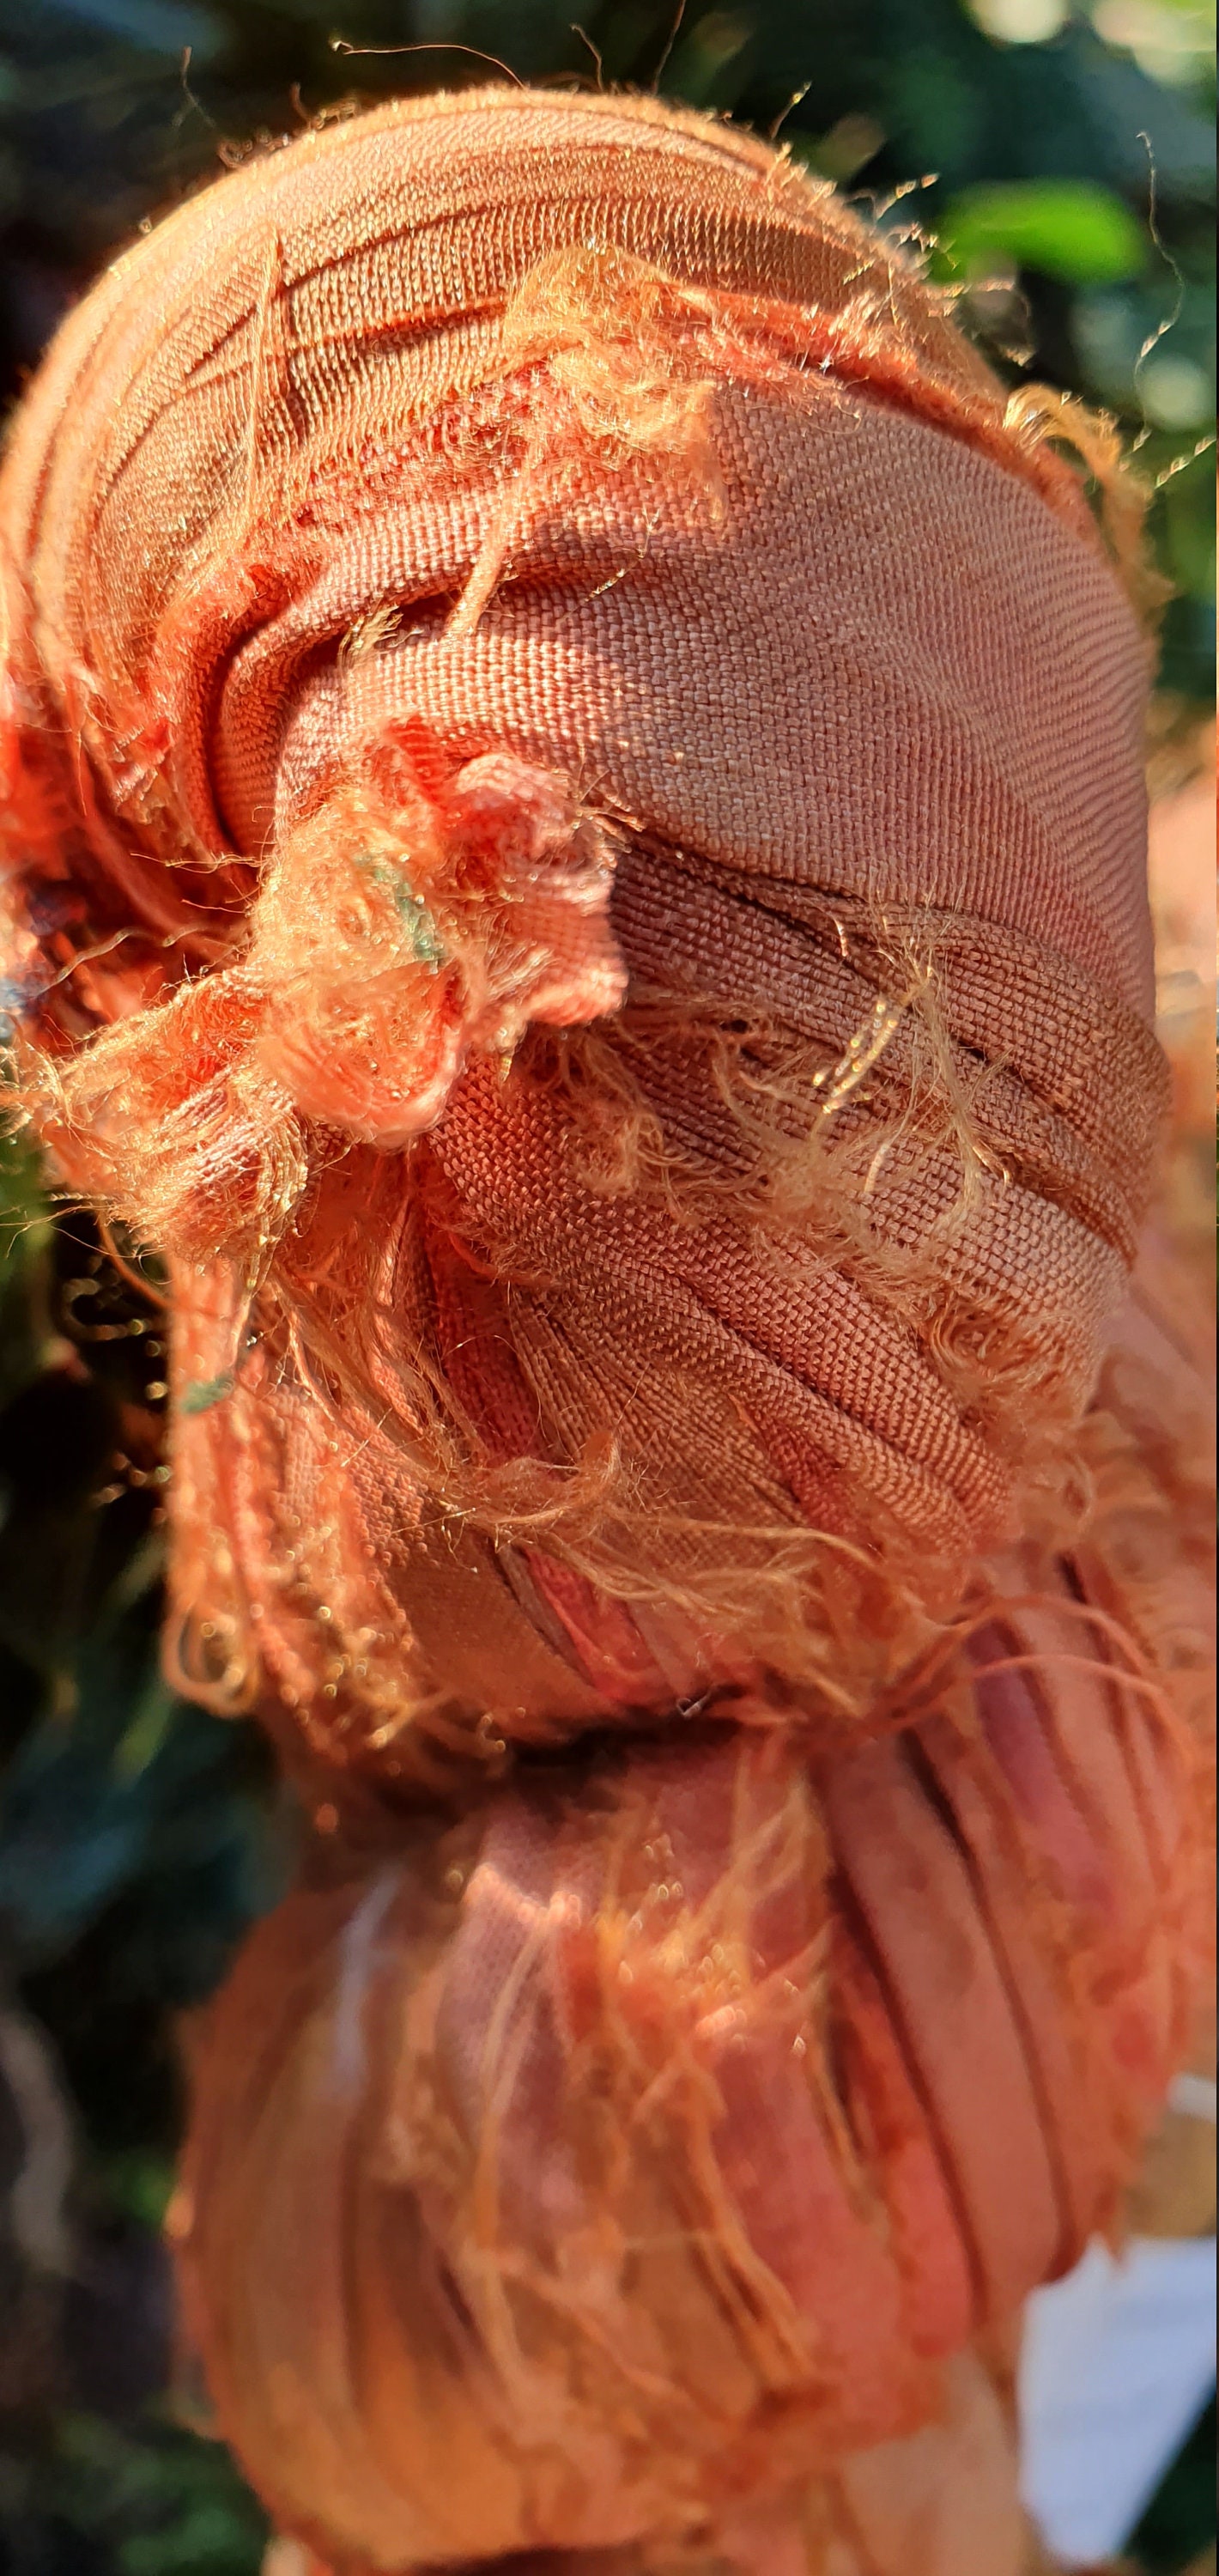 SALMON PINK Sari Silk Ribbon, Fair Trade, Recycled, Handmade Yarn